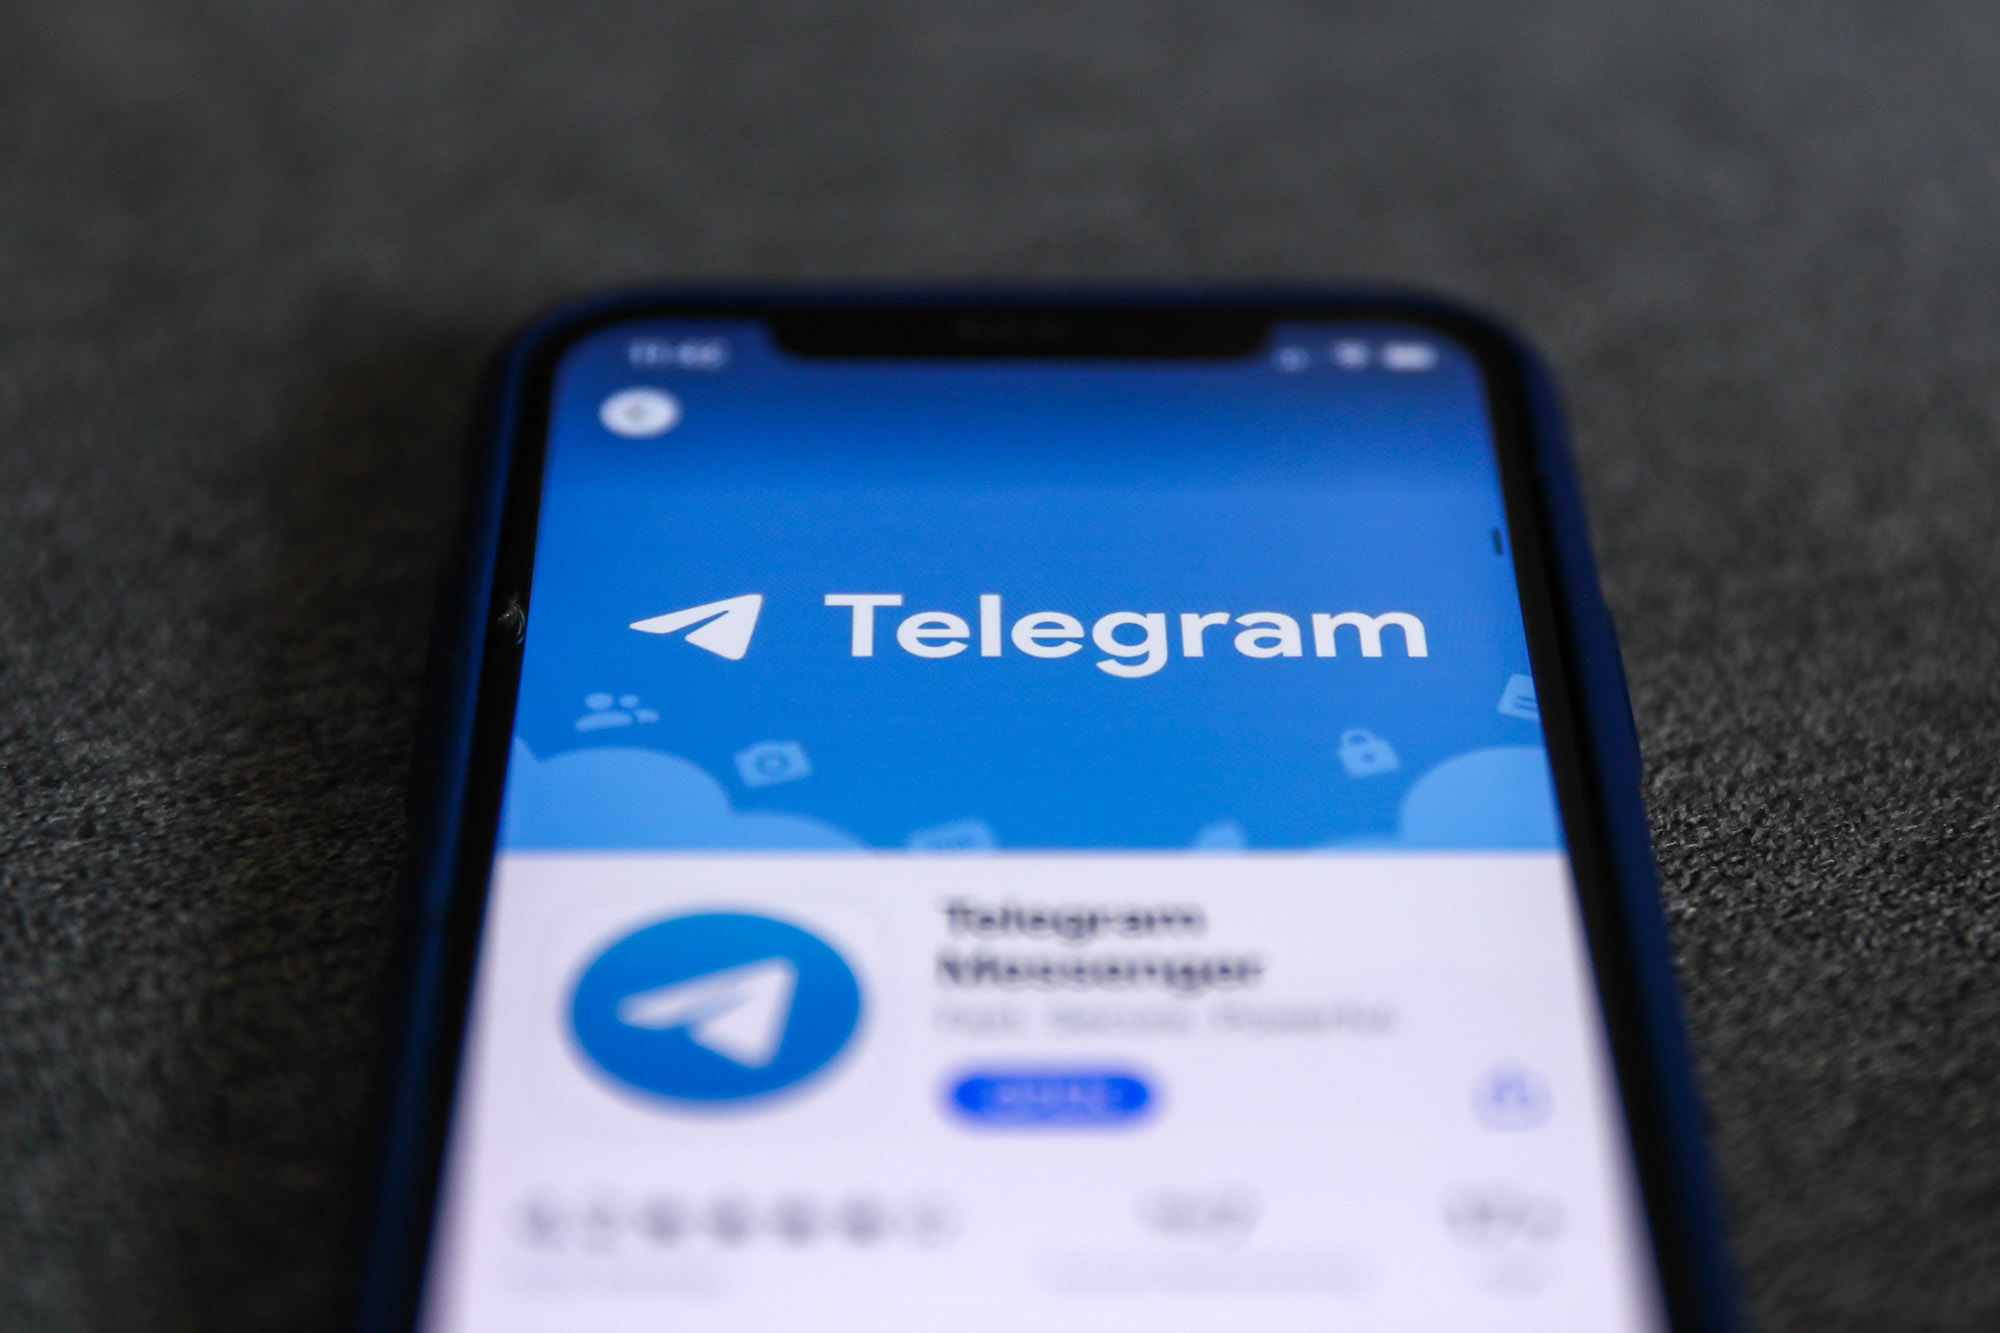 دانلود اپلیکیشن تلگرام.  اعتبار: تلگرام